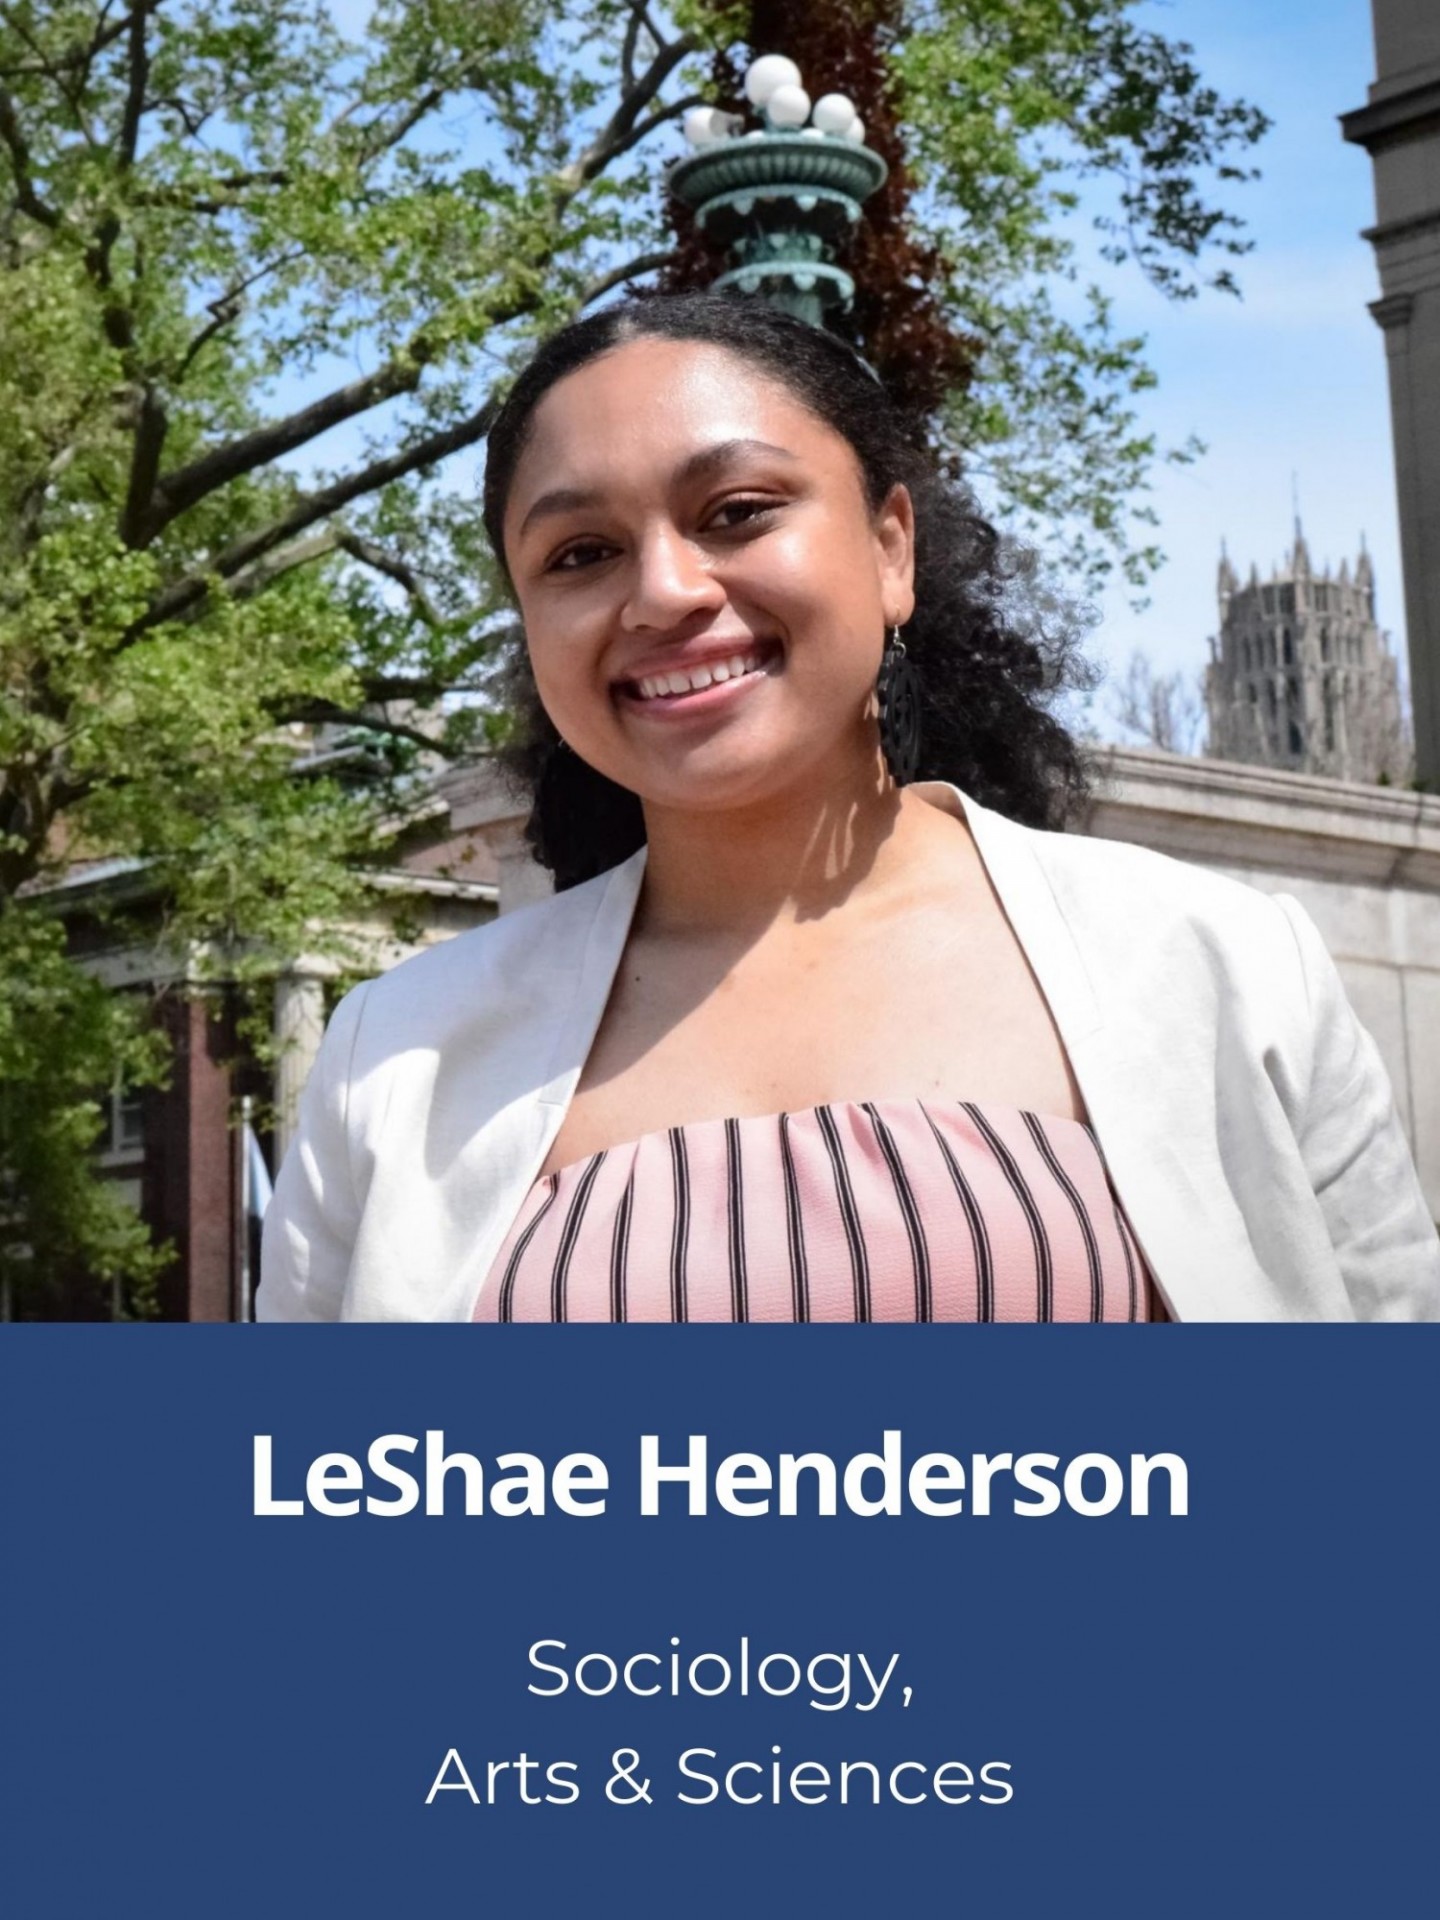 LeShae Henderson Sociology, Arts & Sciences